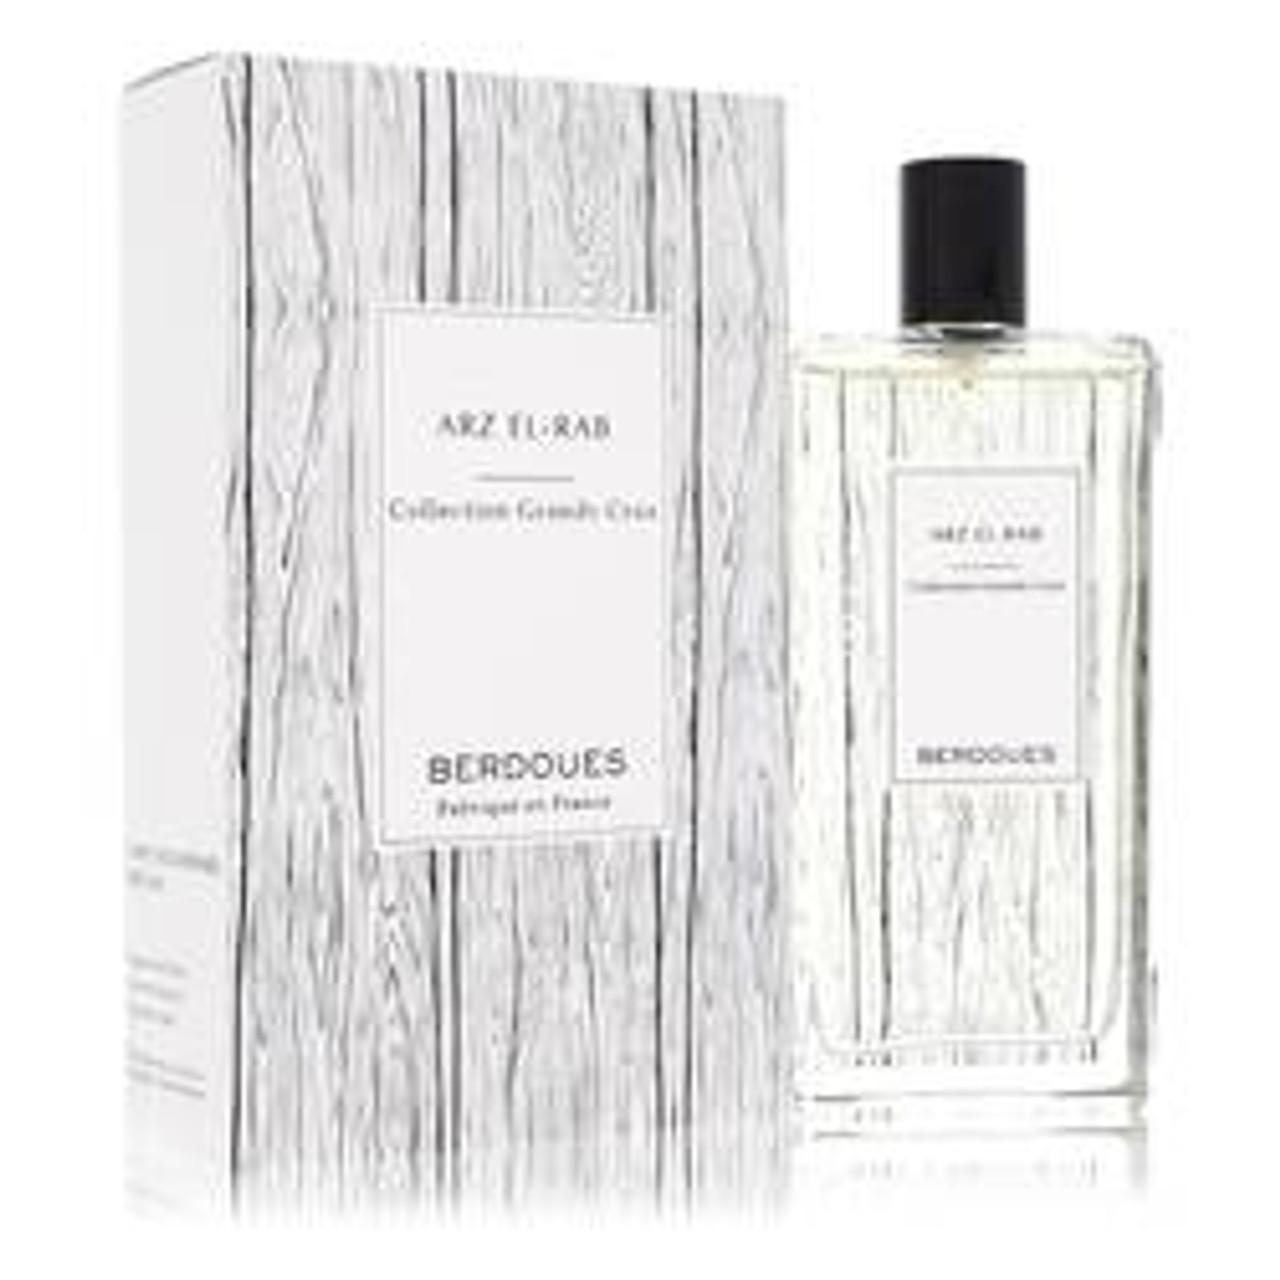 Arz El-rab Perfume By Berdoues Eau De Parfum Spray 3.38 oz for Women - *Pre-Order